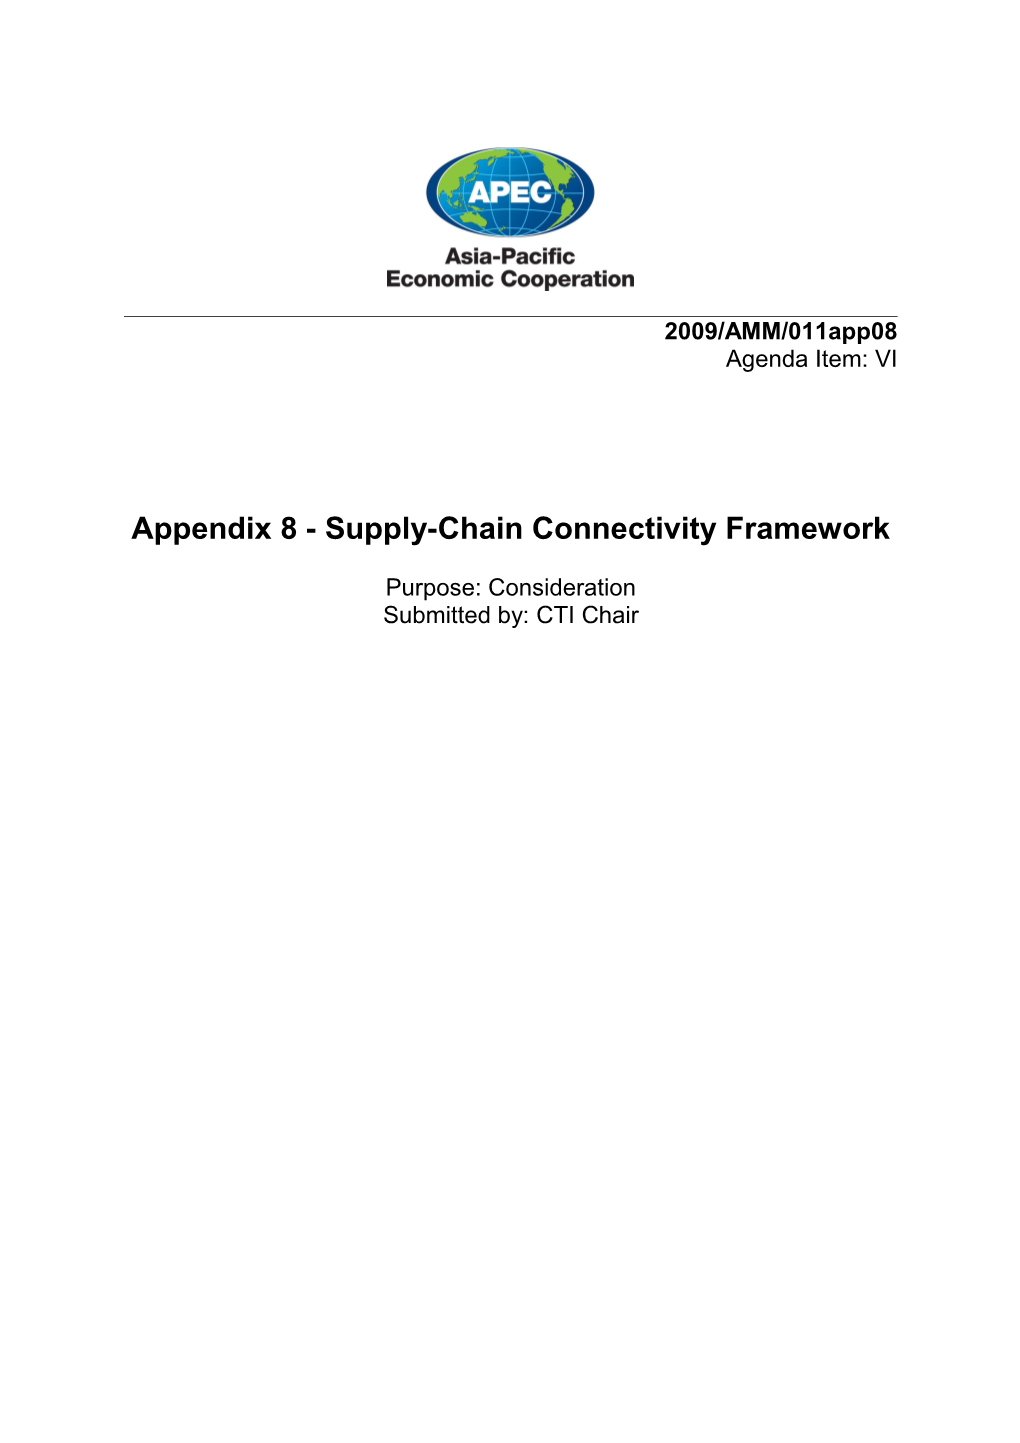 Supply-Chain Connectivity Framework